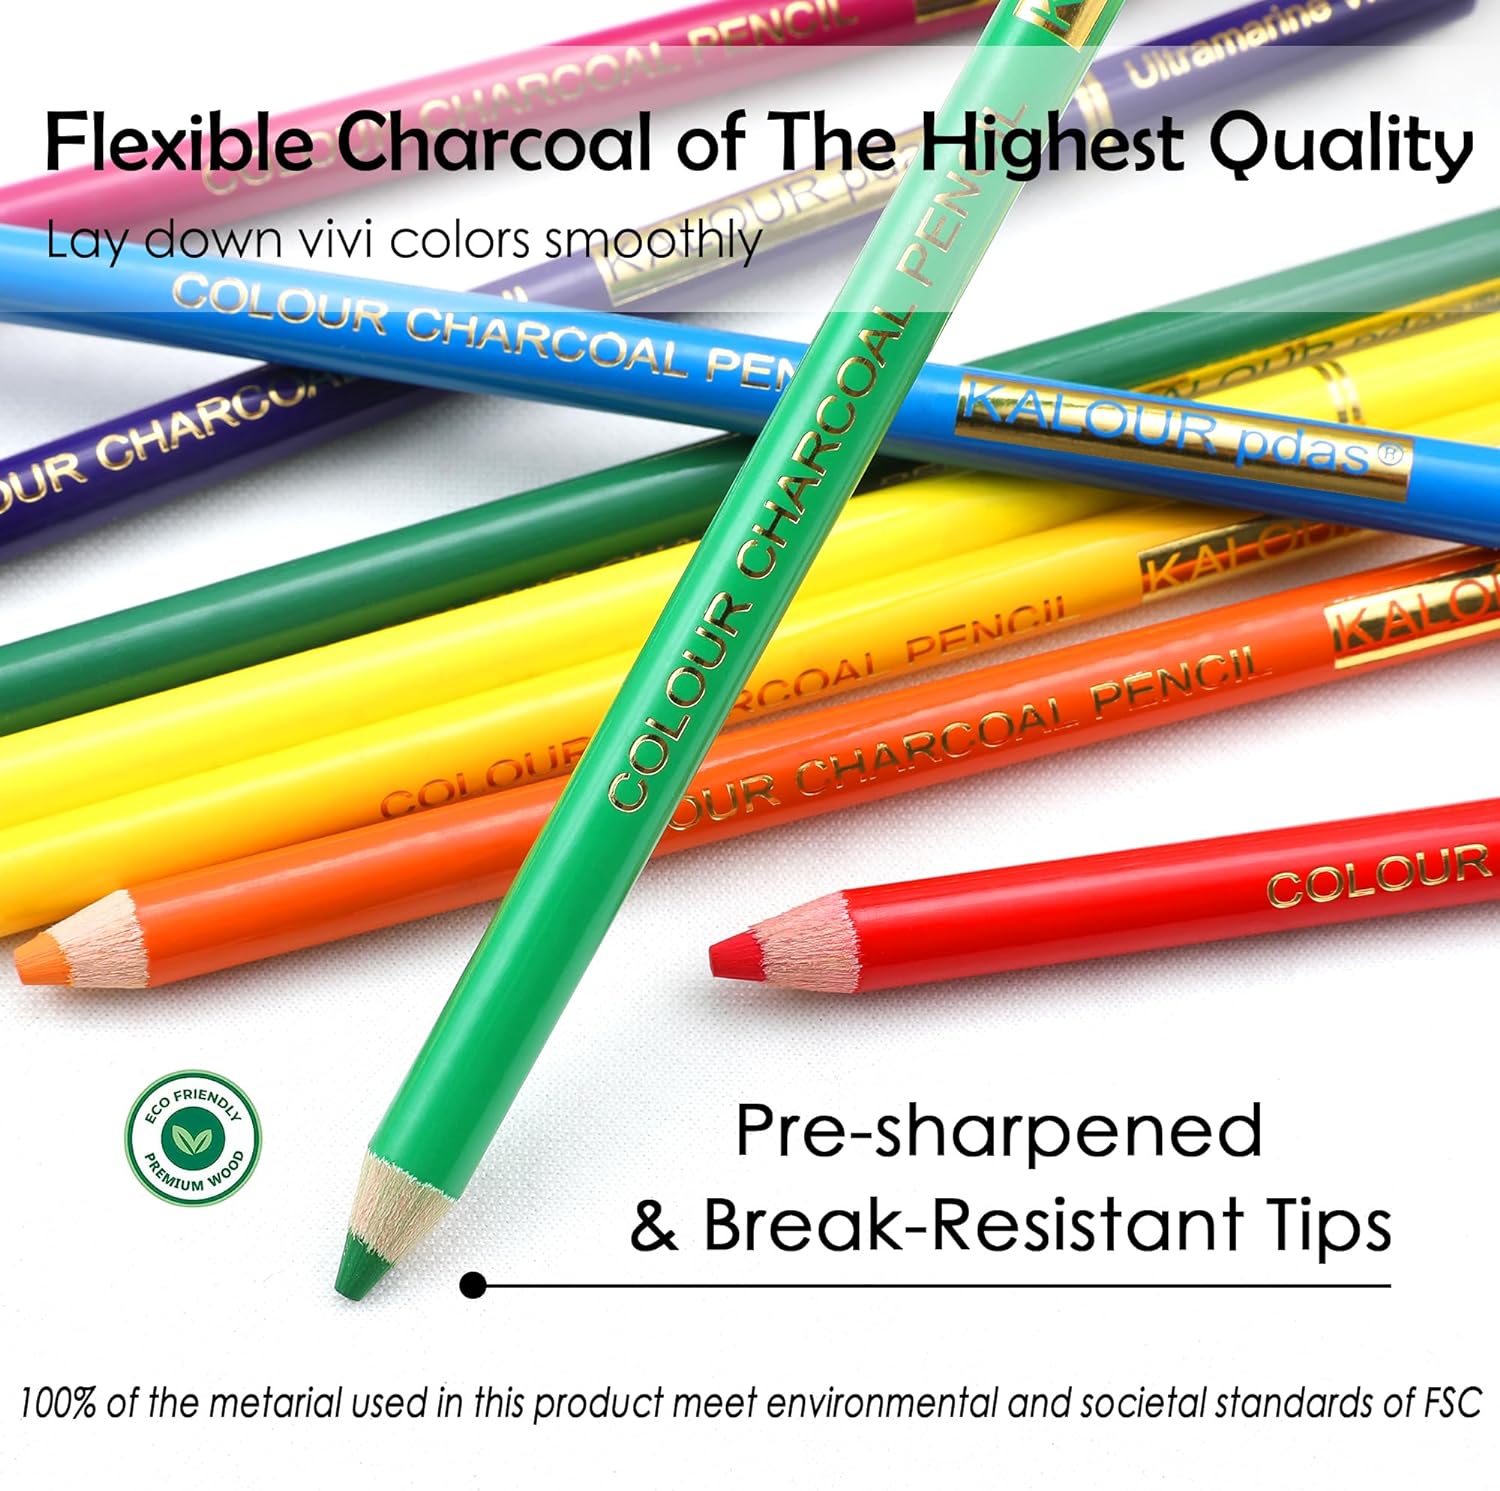 KALOUR 24 Premium Colored Charcoal Pencils Drawing Set